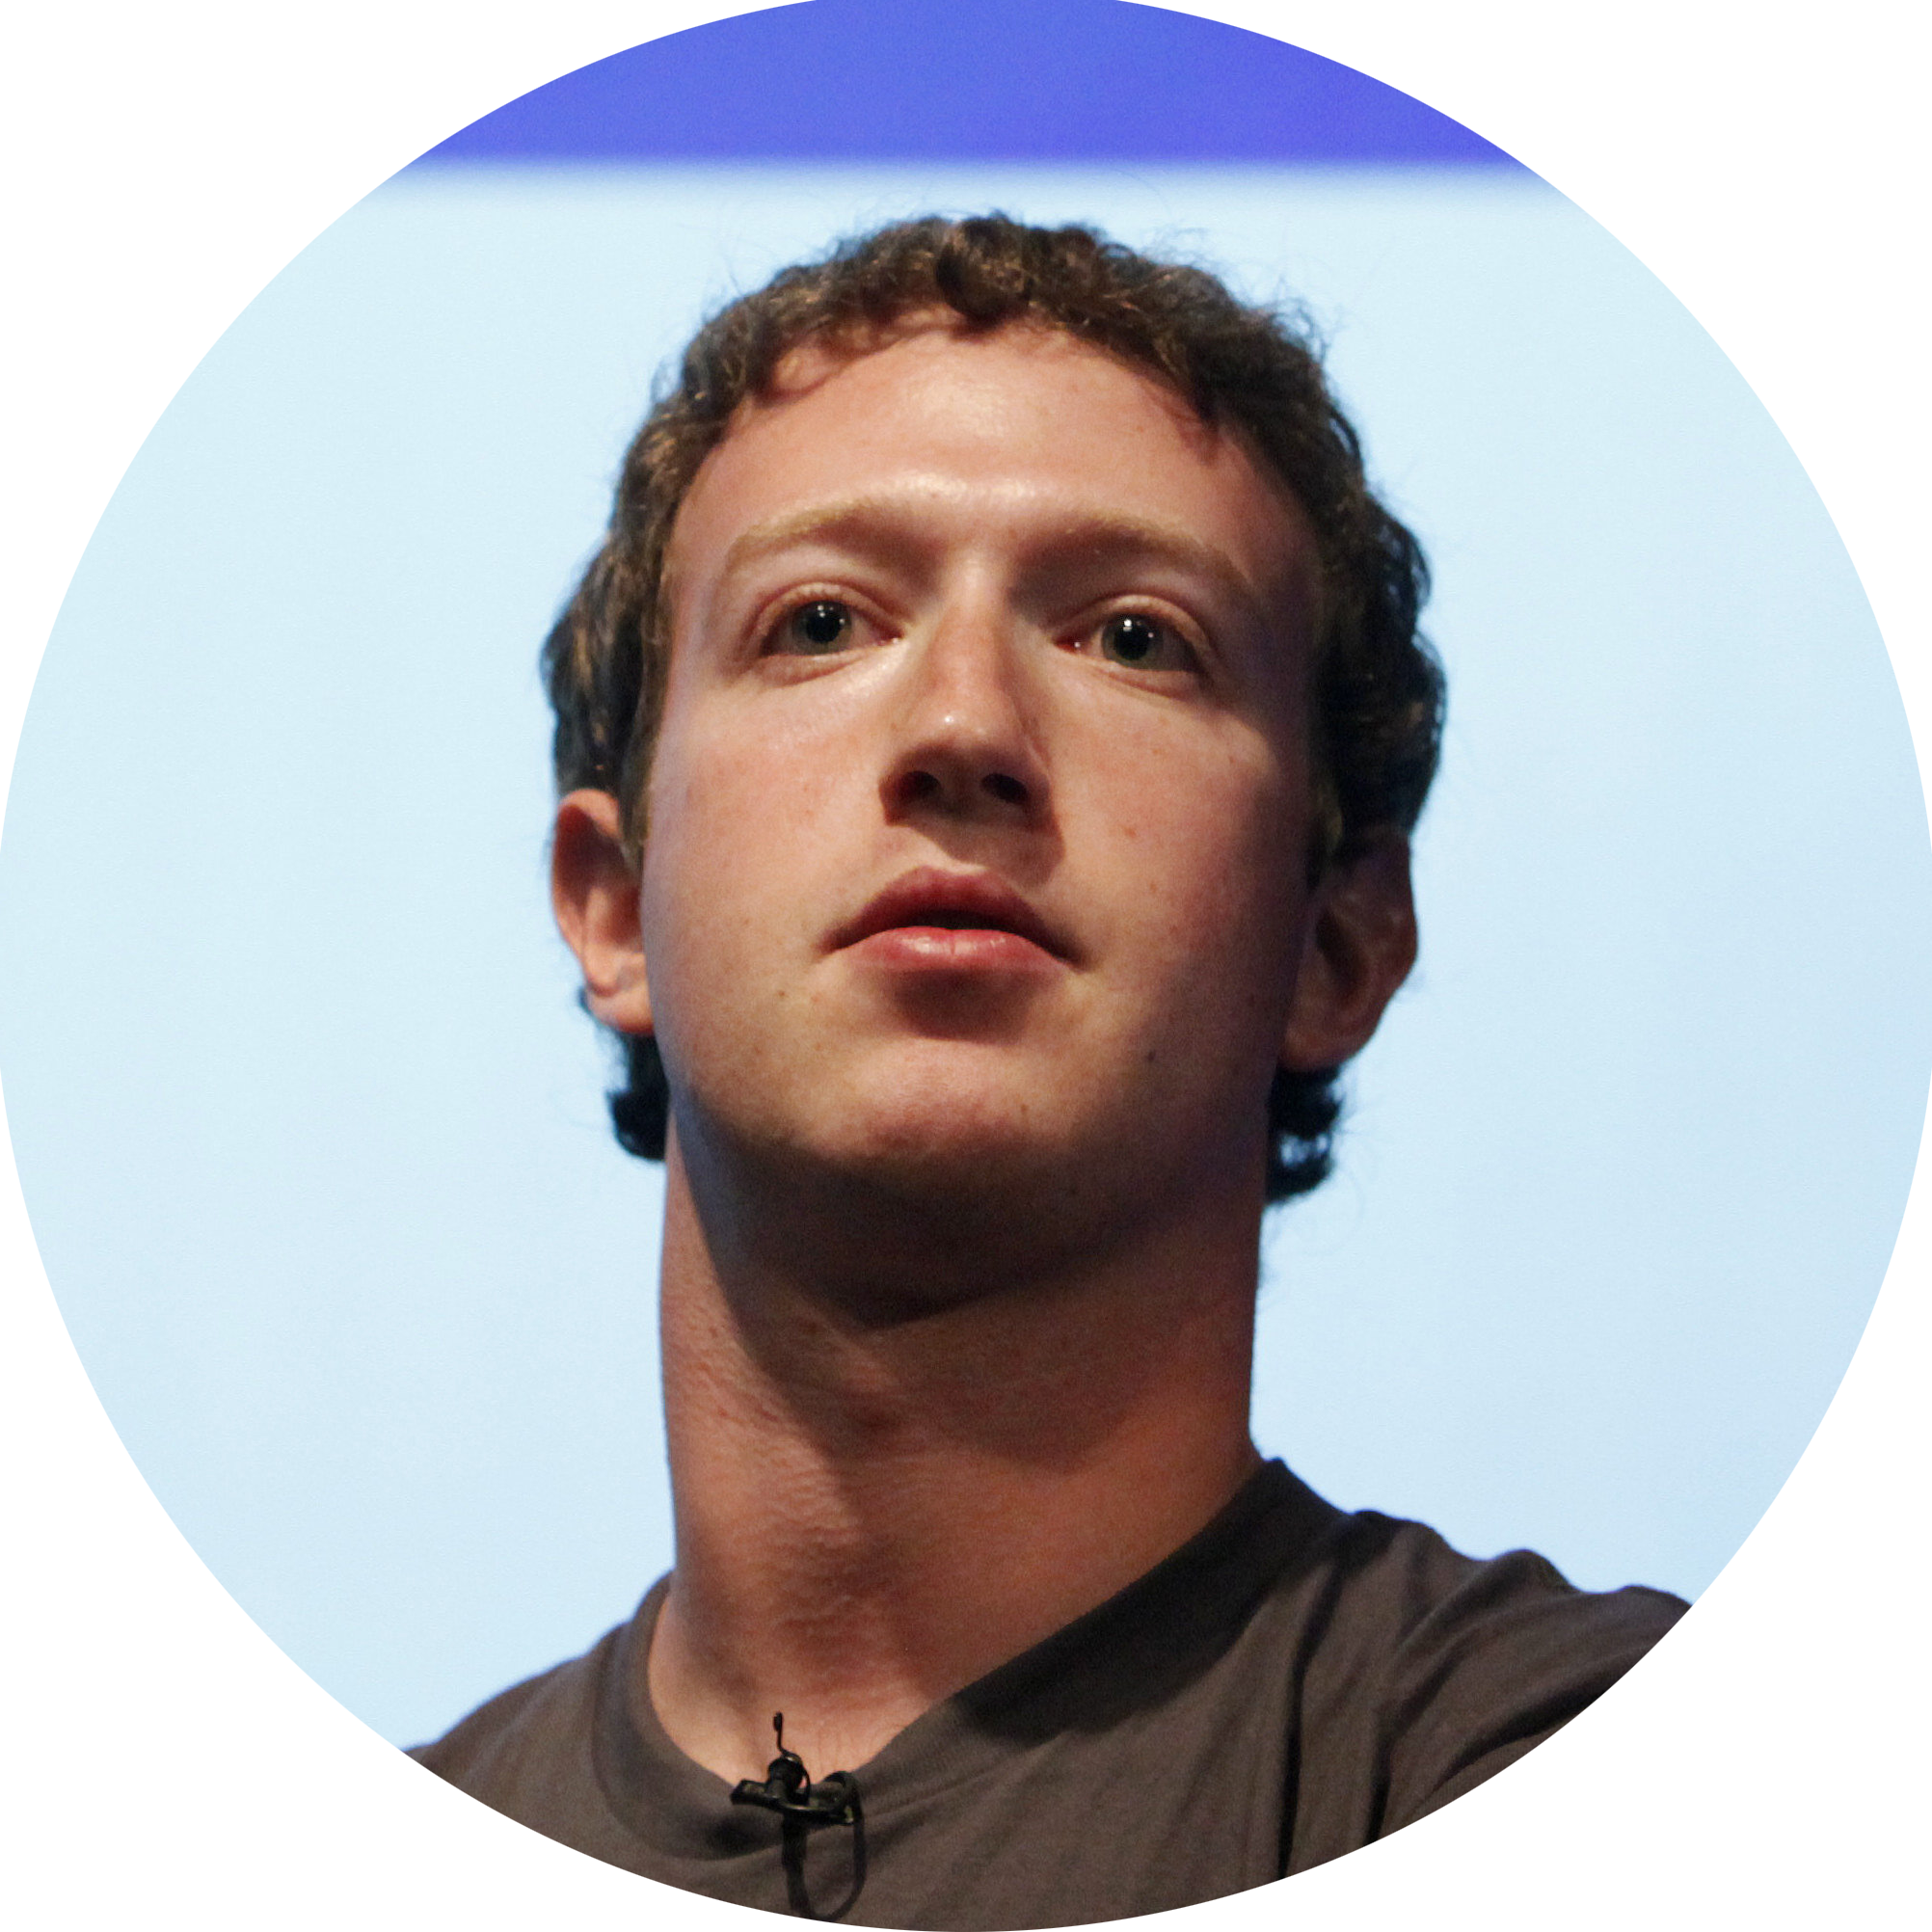 Zuckerberg F8 Facebook Mark Free HQ Image PNG Image